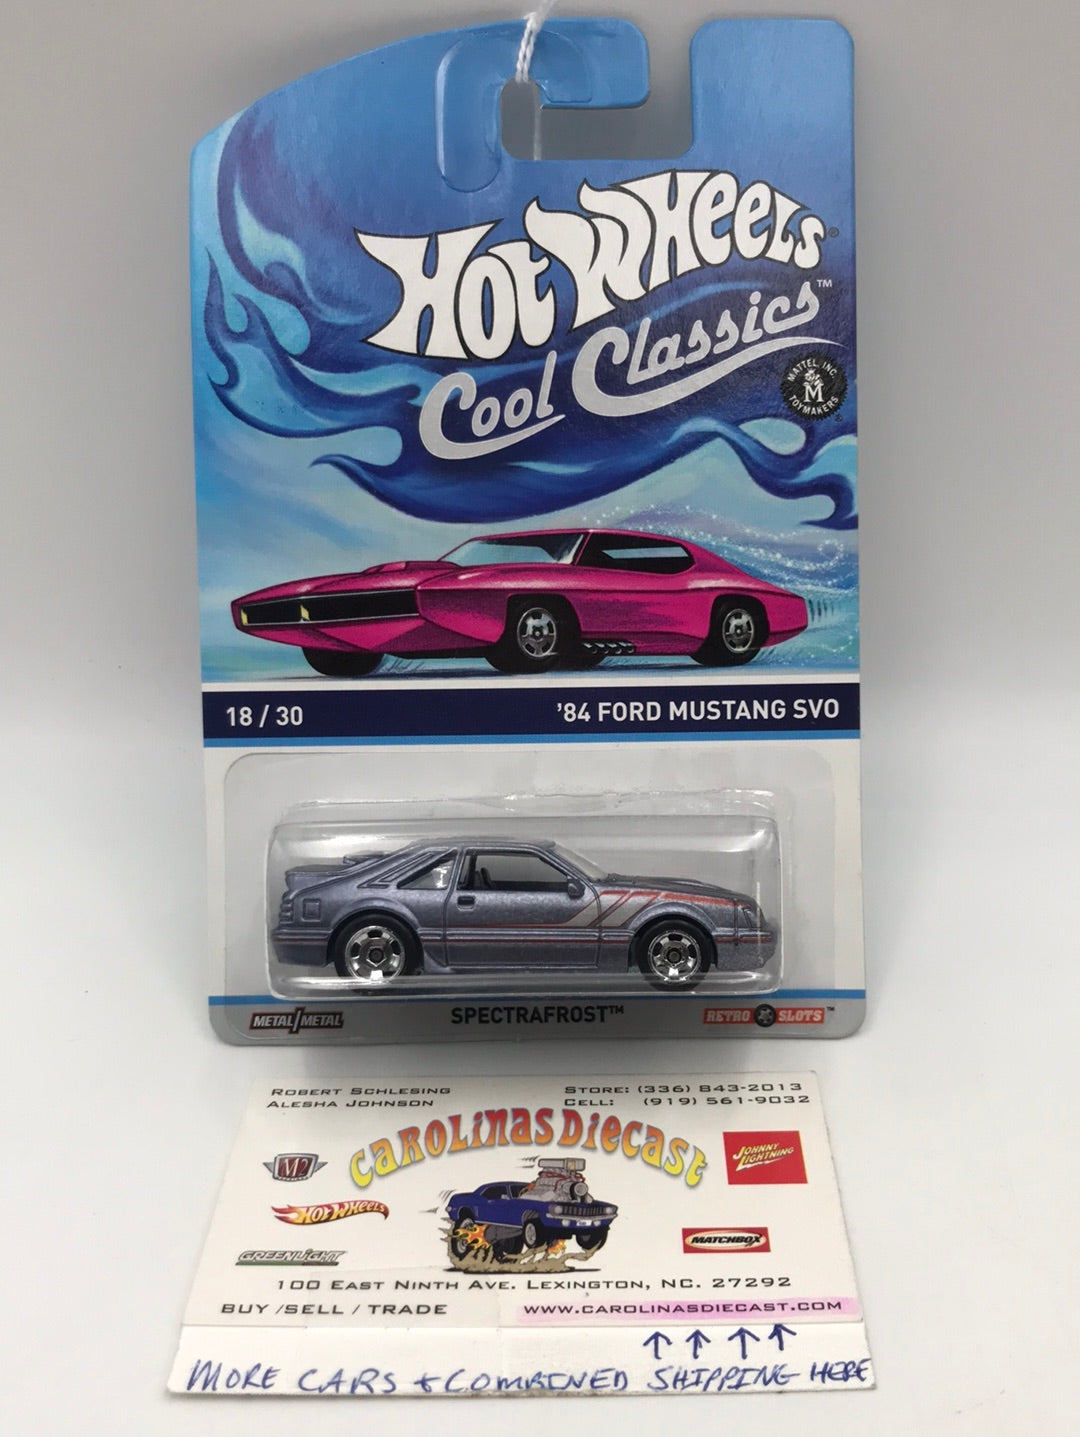 Hot wheels cool classics 84 Ford Mustang SVO 18/30 metal/metal retro slots pink car on card Z5